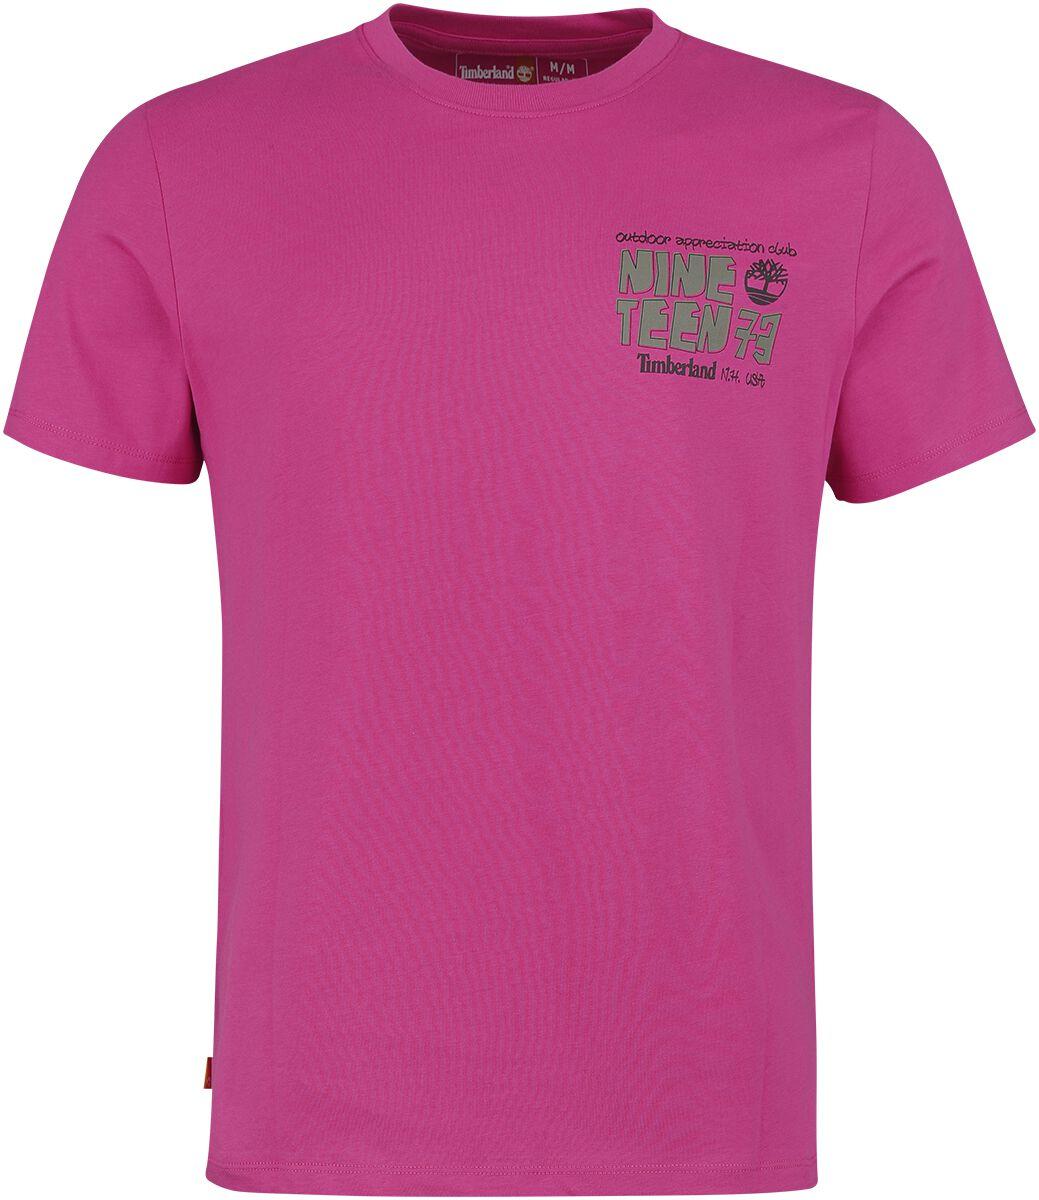 timberland t-shirt - outdoor back graphic tee - s bis m - fÃ¼r mÃ¤nner - grÃ¶ÃŸe s - pink